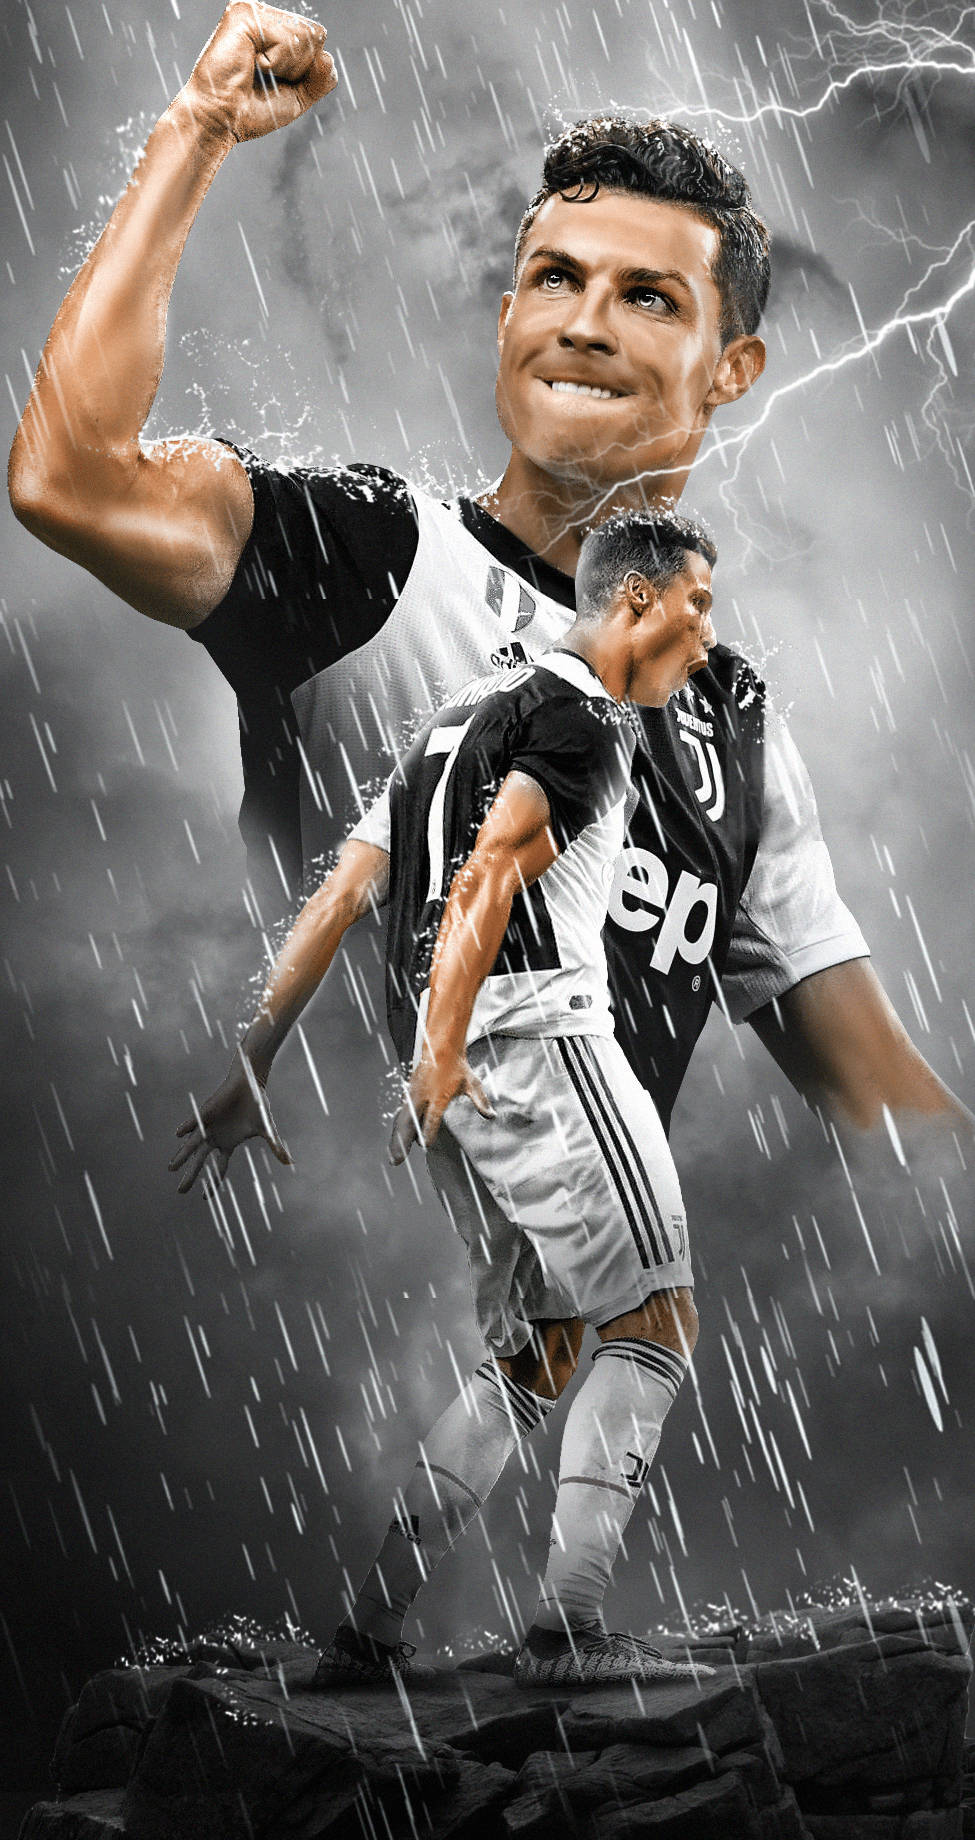 Free Ronaldo iPhone Wallpaper Downloads, Ronaldo iPhone Wallpaper for FREE